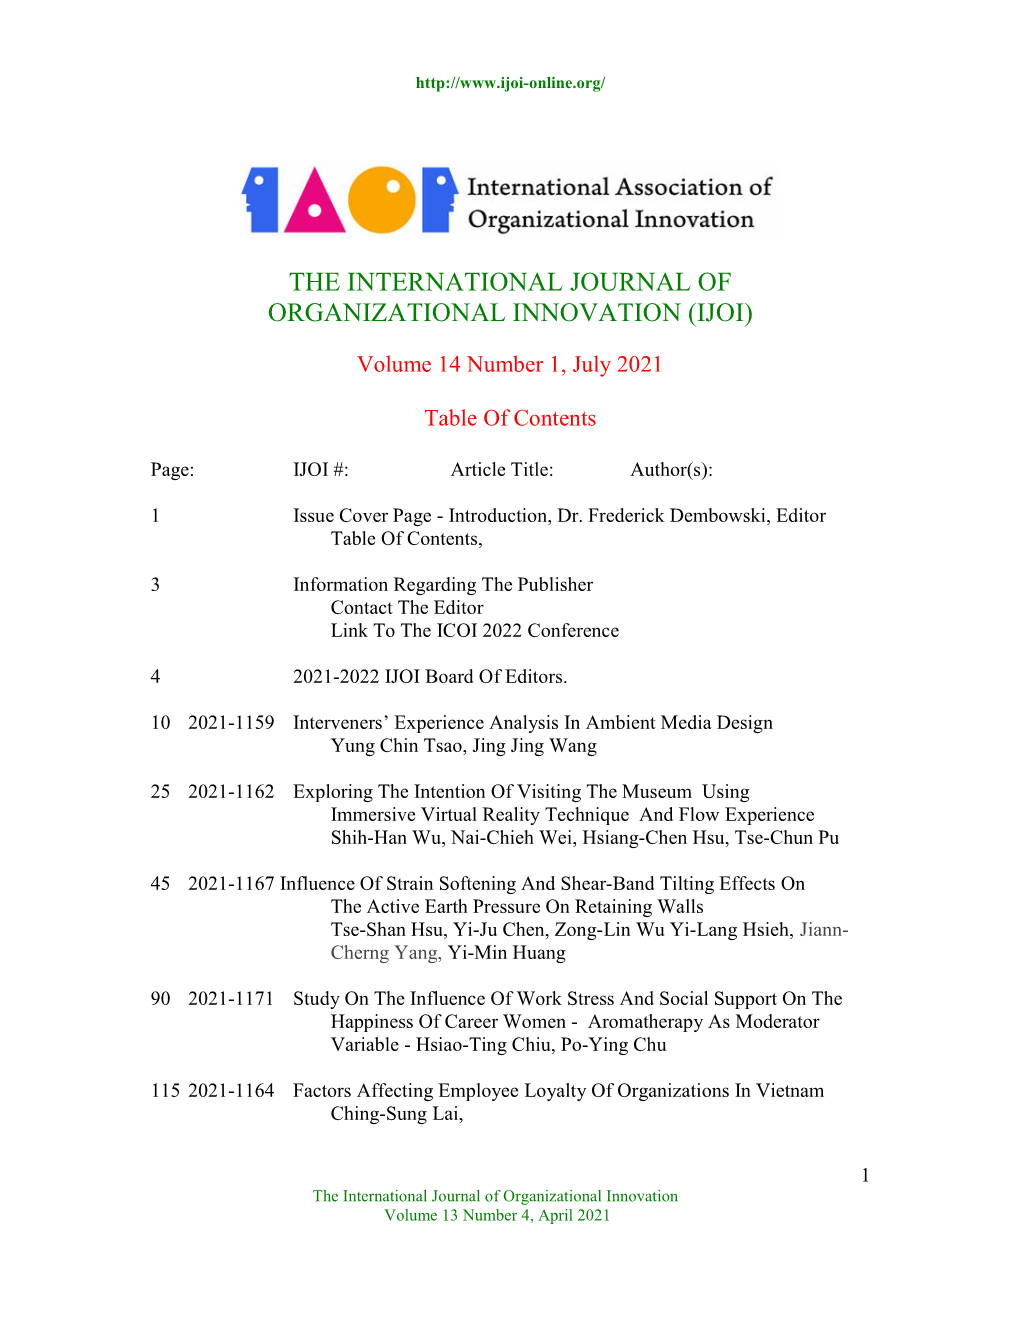 The International Journal of Organizational Innovation (Ijoi)